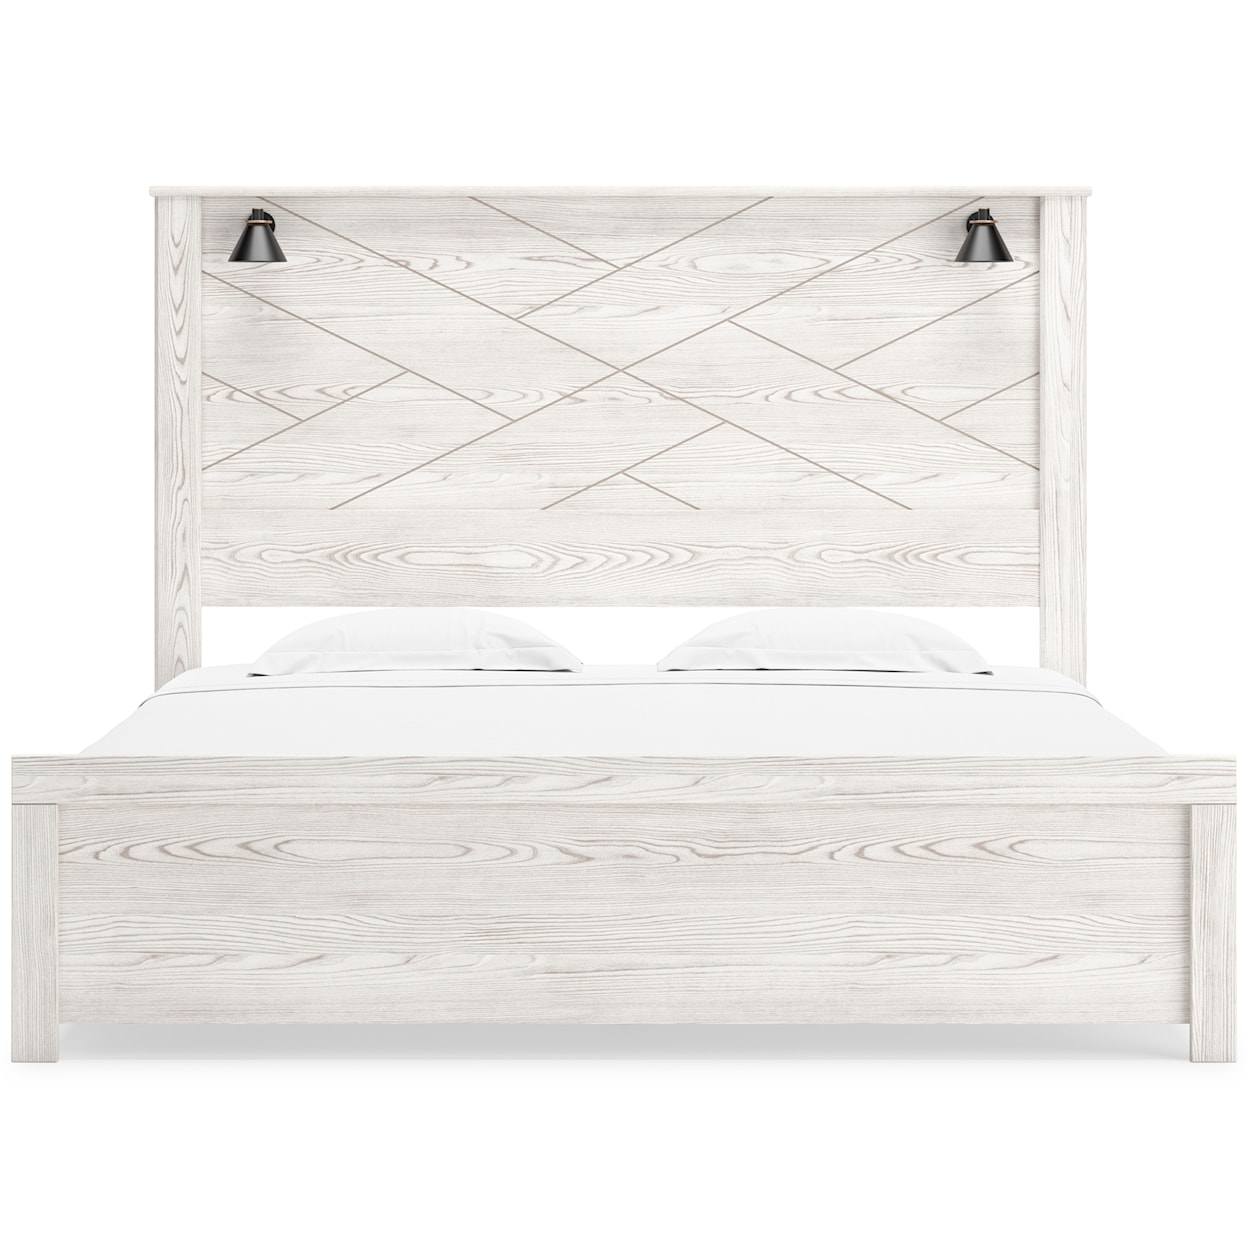 Ashley Furniture Signature Design Gerridan King Panel Bed